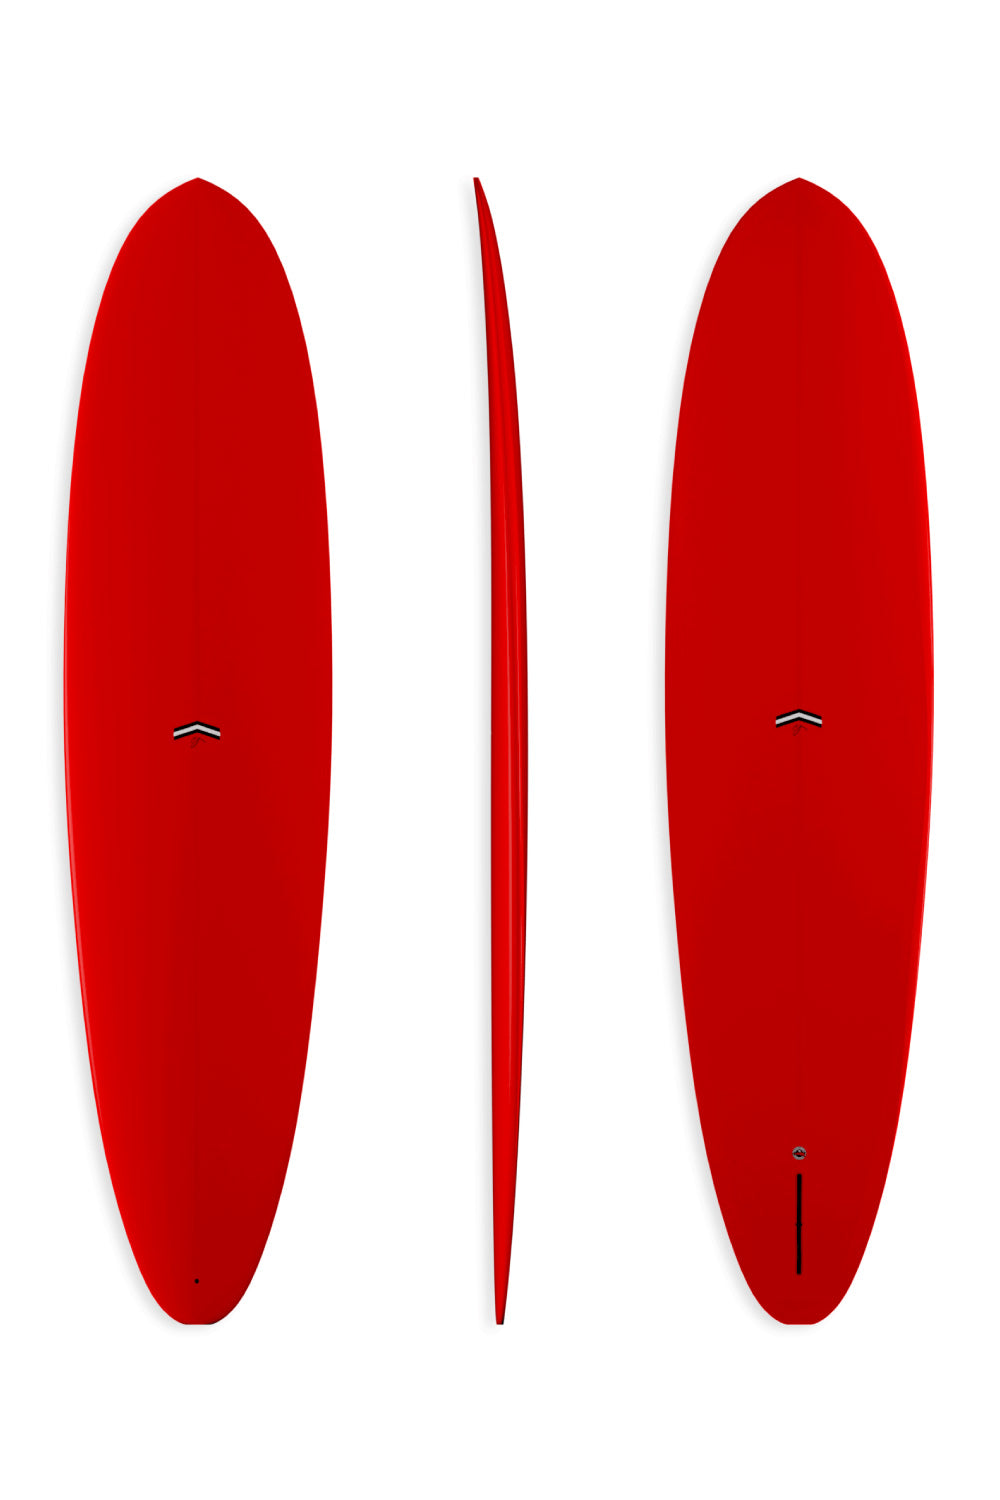 Firewire Thunderbolt Outlier Mid Length Surfboard